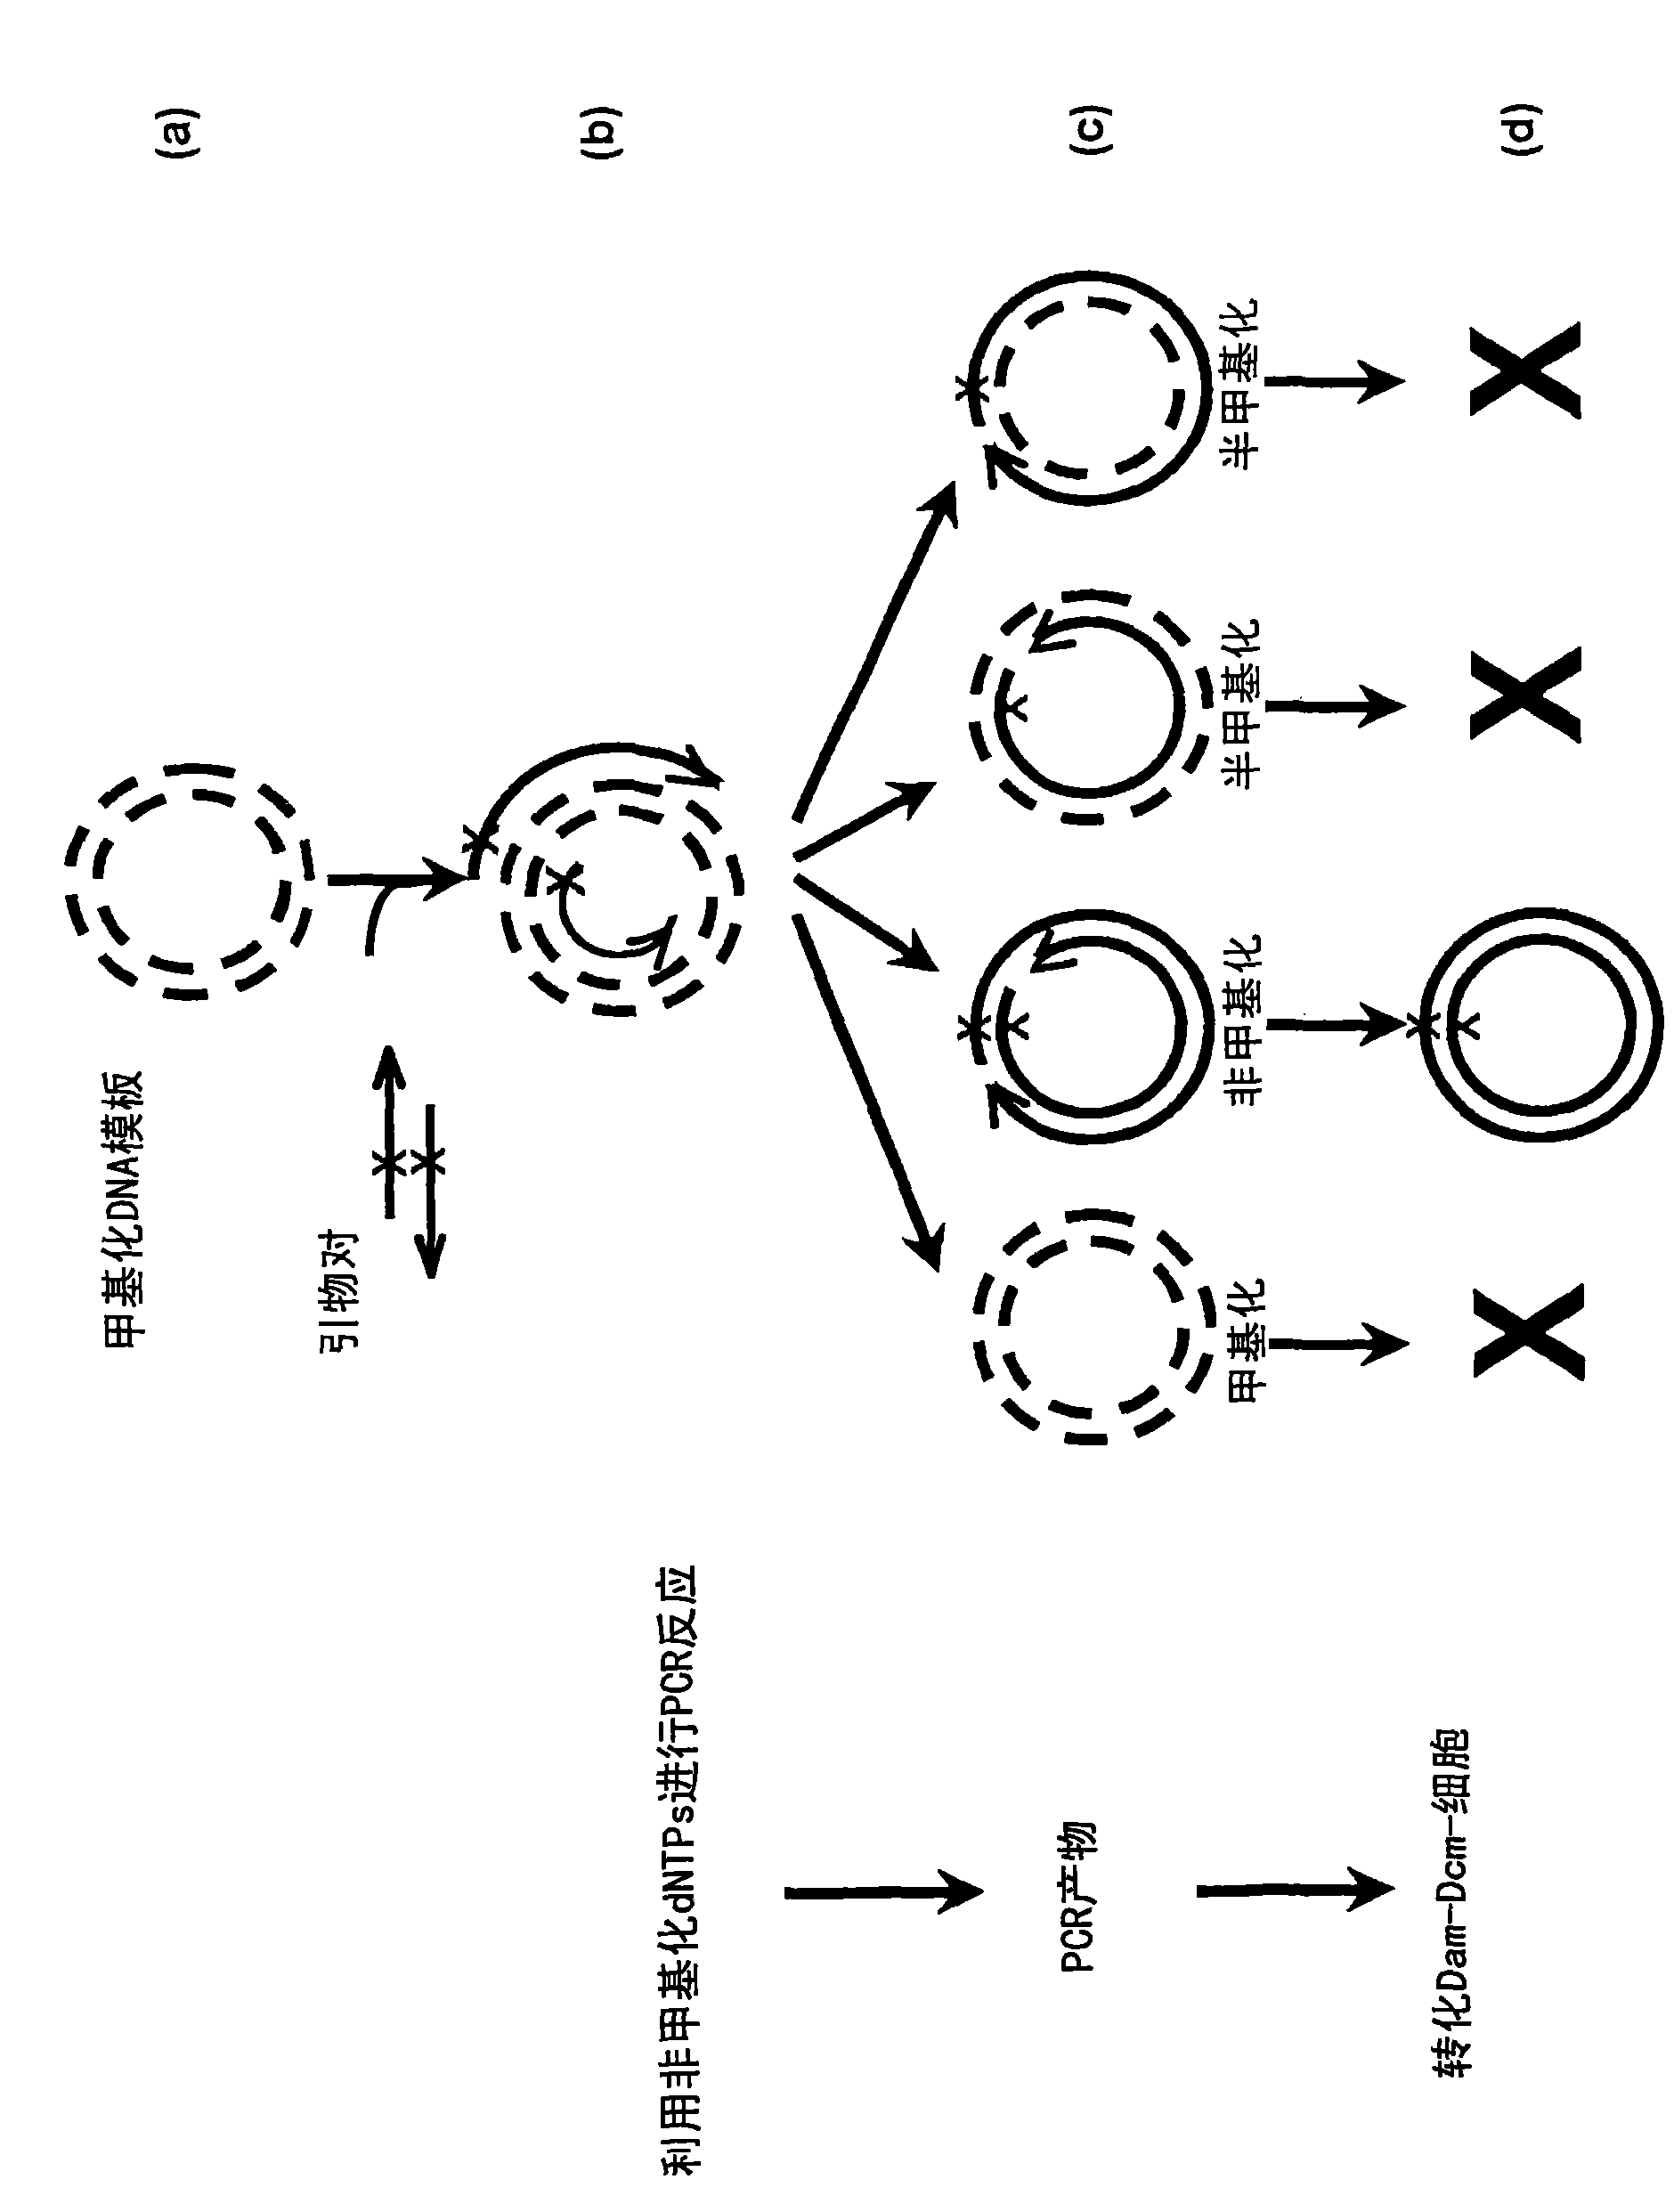 Site-directed mutagenesis in circular methylated DNA